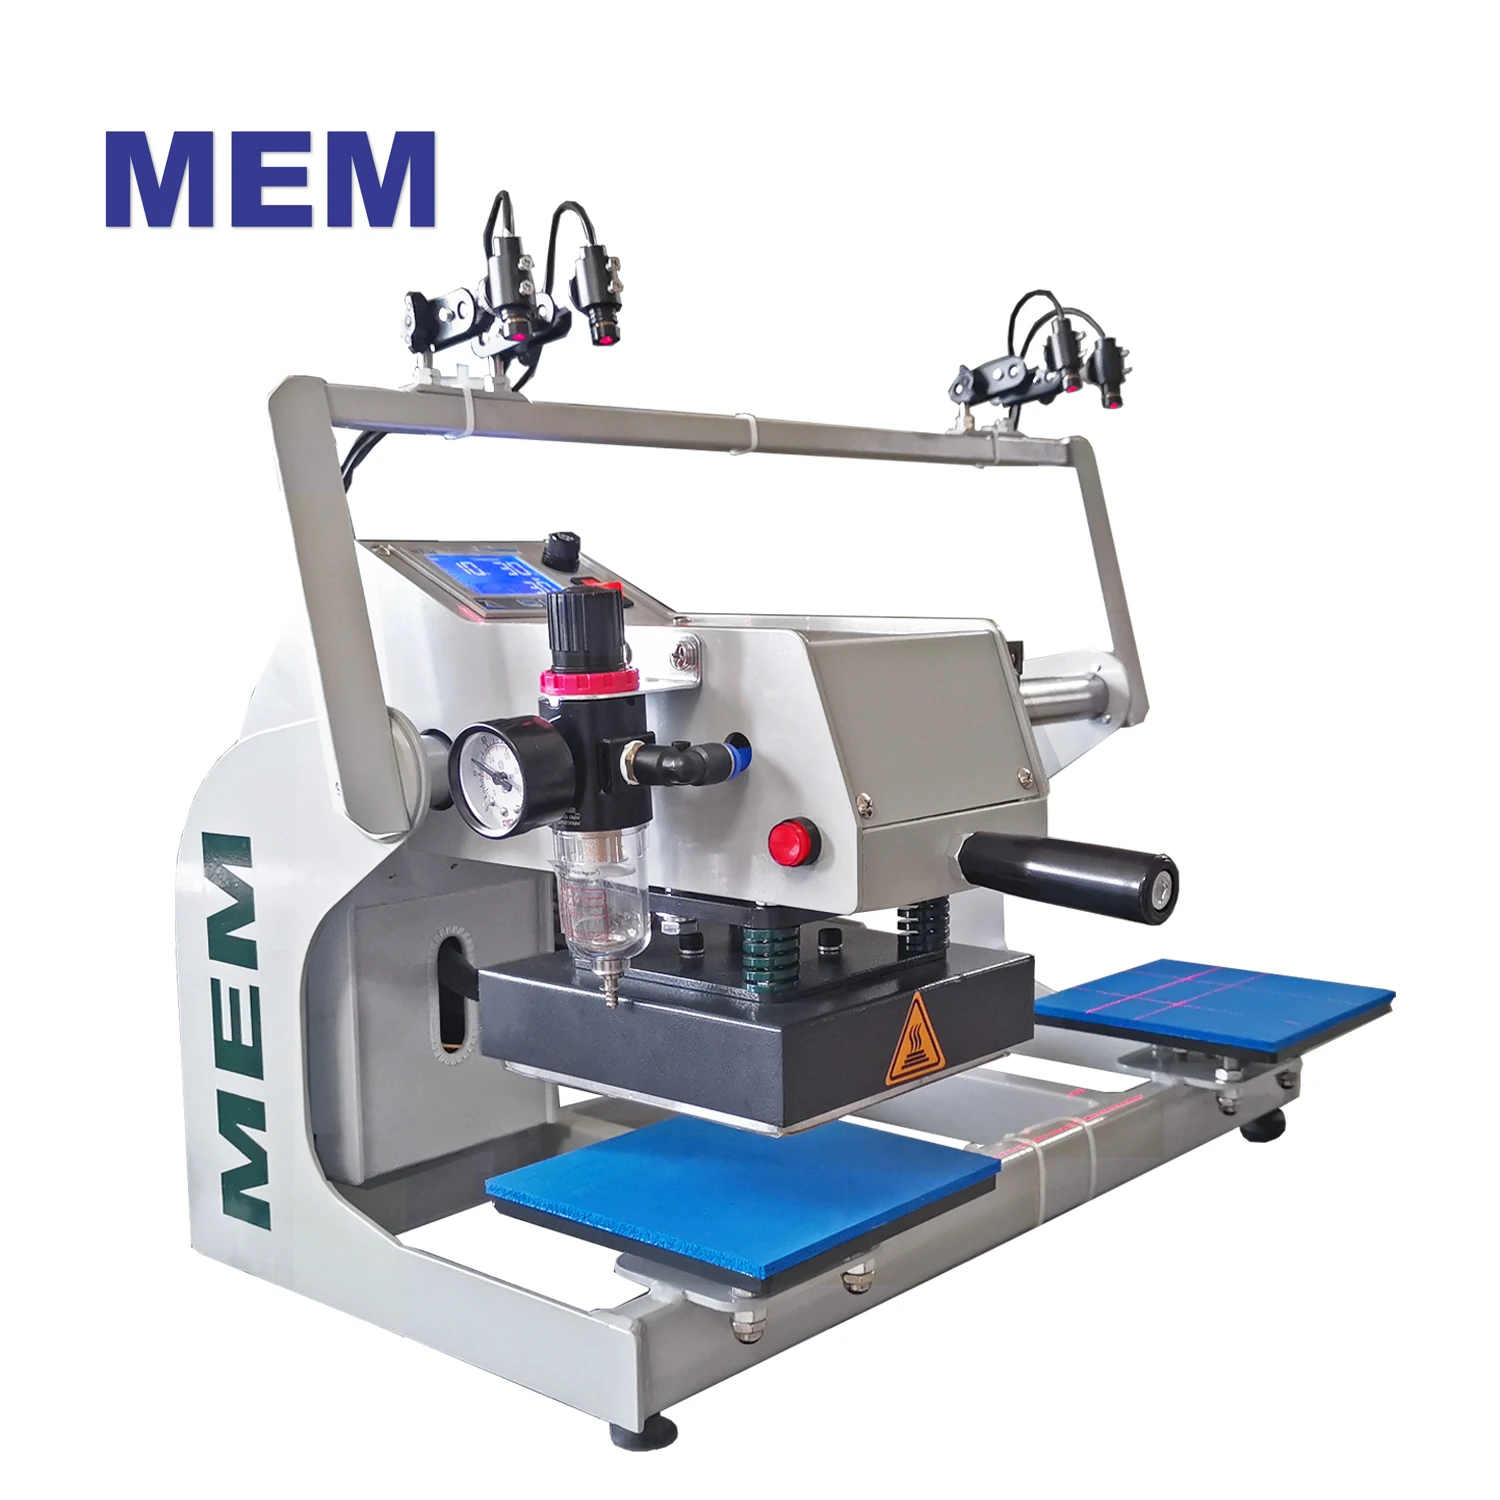 

TQ1515 USA free shipment MEM 1515 double plate cotton fabric heat press machine for children clothes